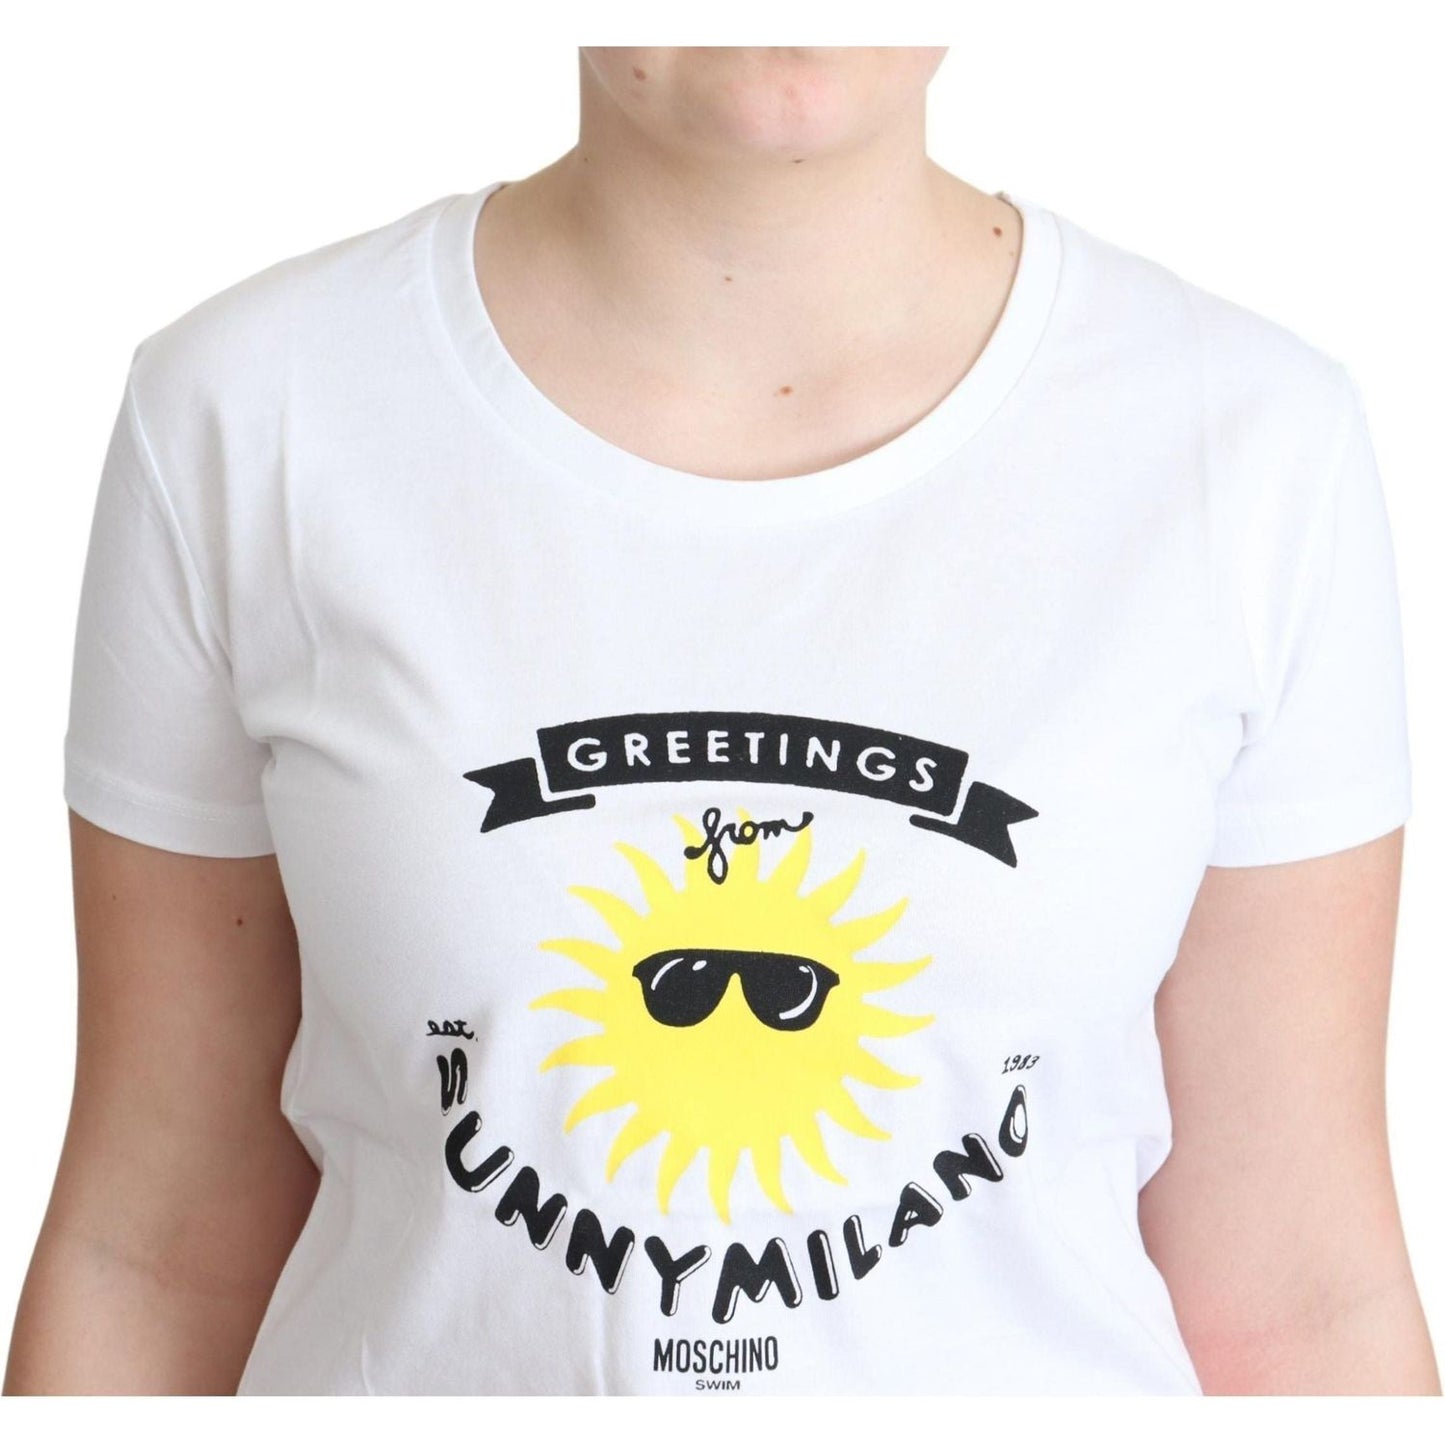 Moschino Sunny Milano Print Cotton Tee white-cotton-sunny-milano-print-t-shirt IMG_0928-scaled-b7c907c8-922.jpg